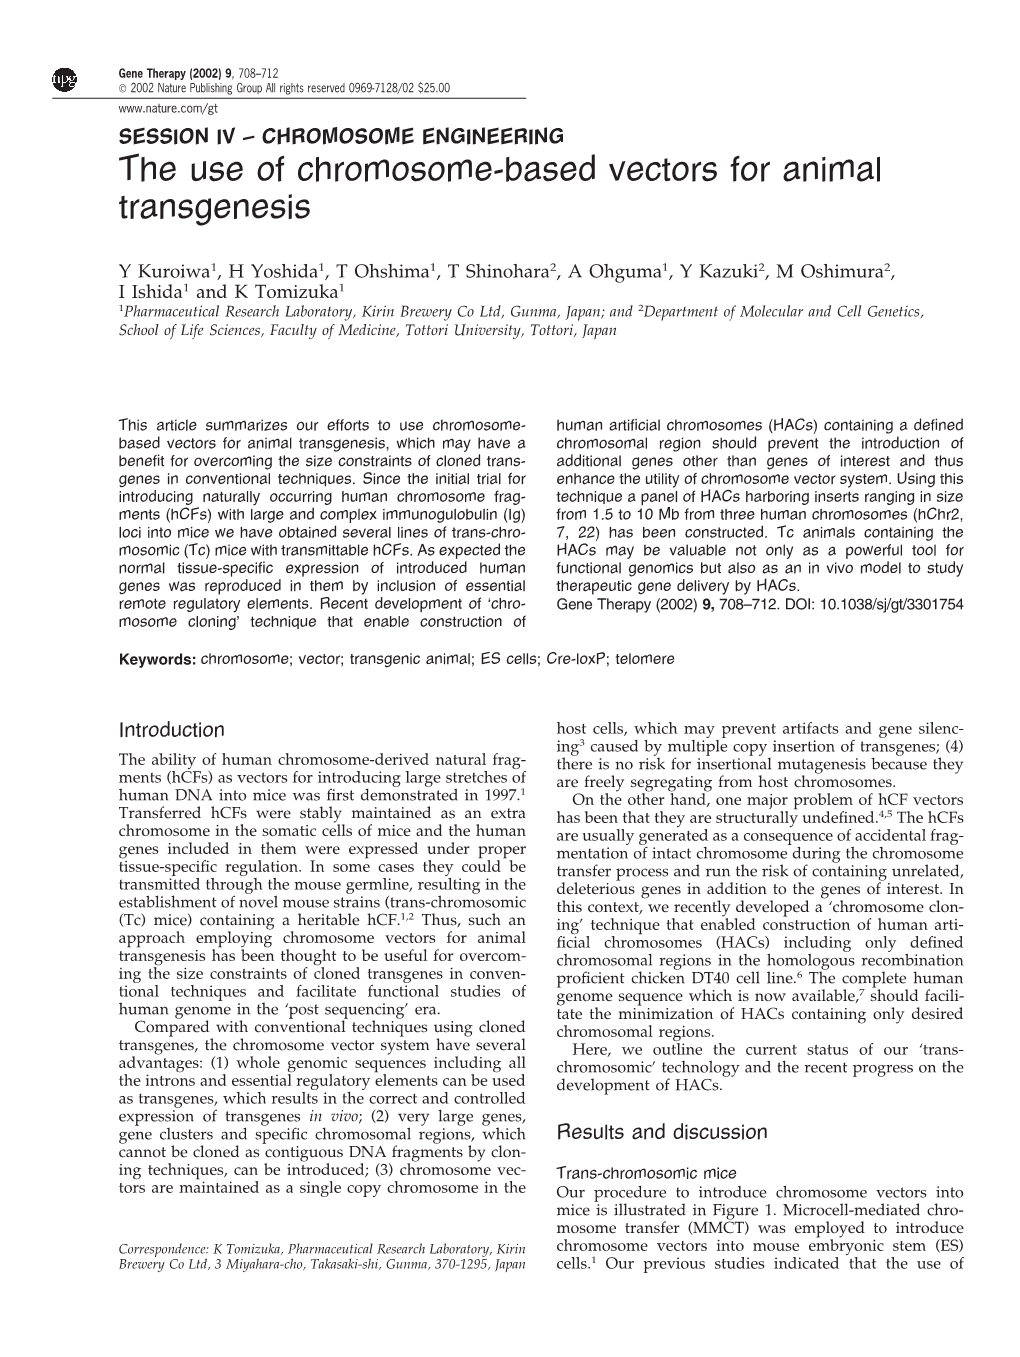 The Use of Chromosome-Based Vectors for Animal Transgenesis